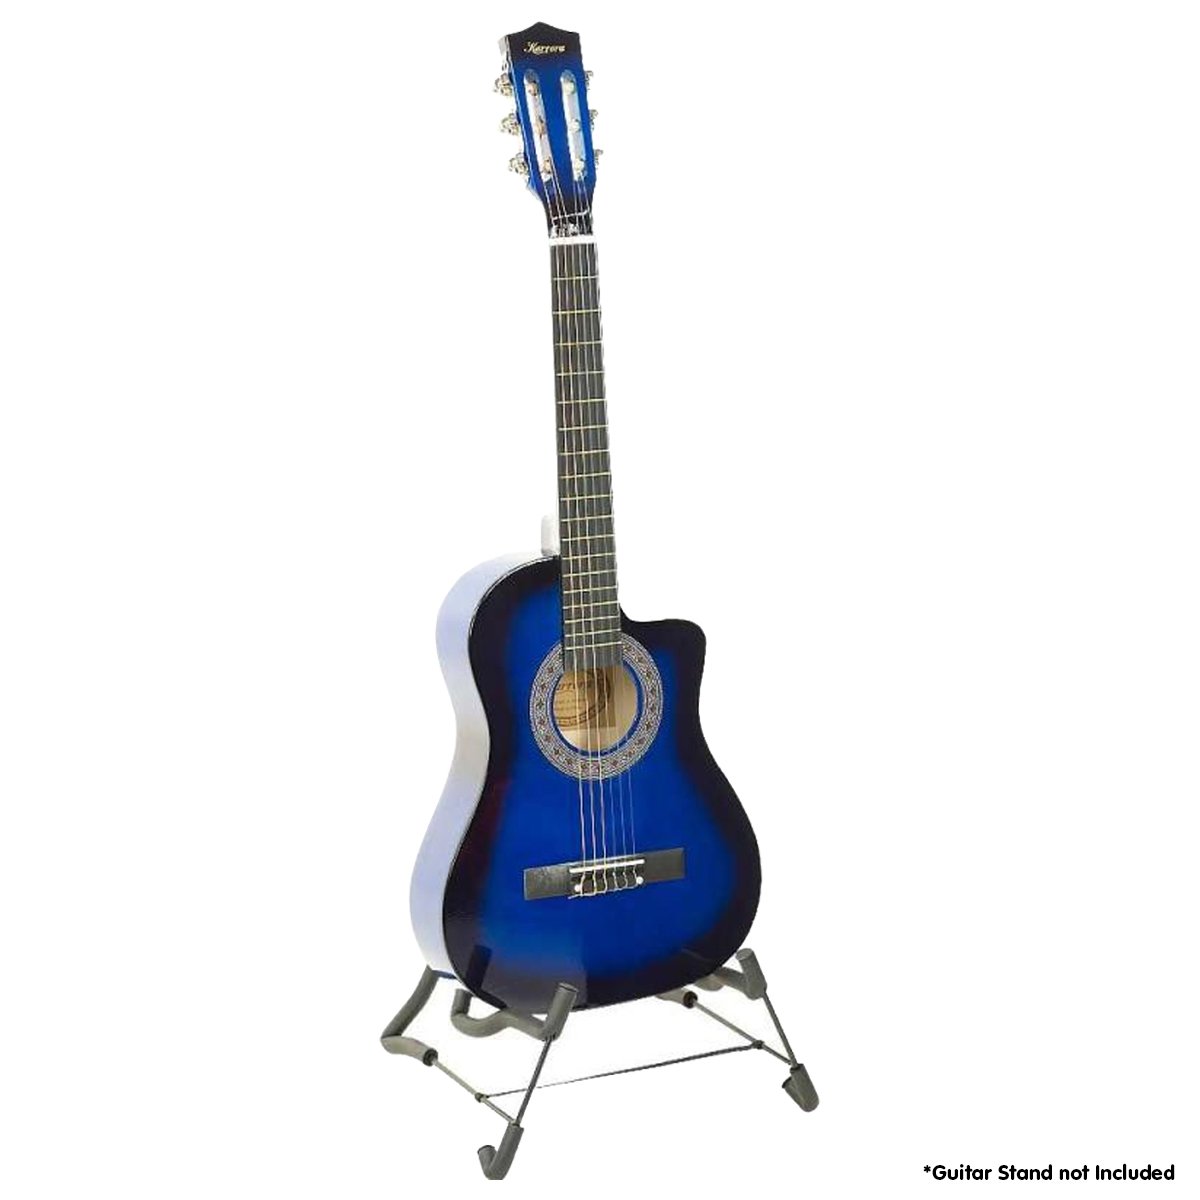 38in Cutaway Acoustic Guitar with guitar bag - Blue Burst 1